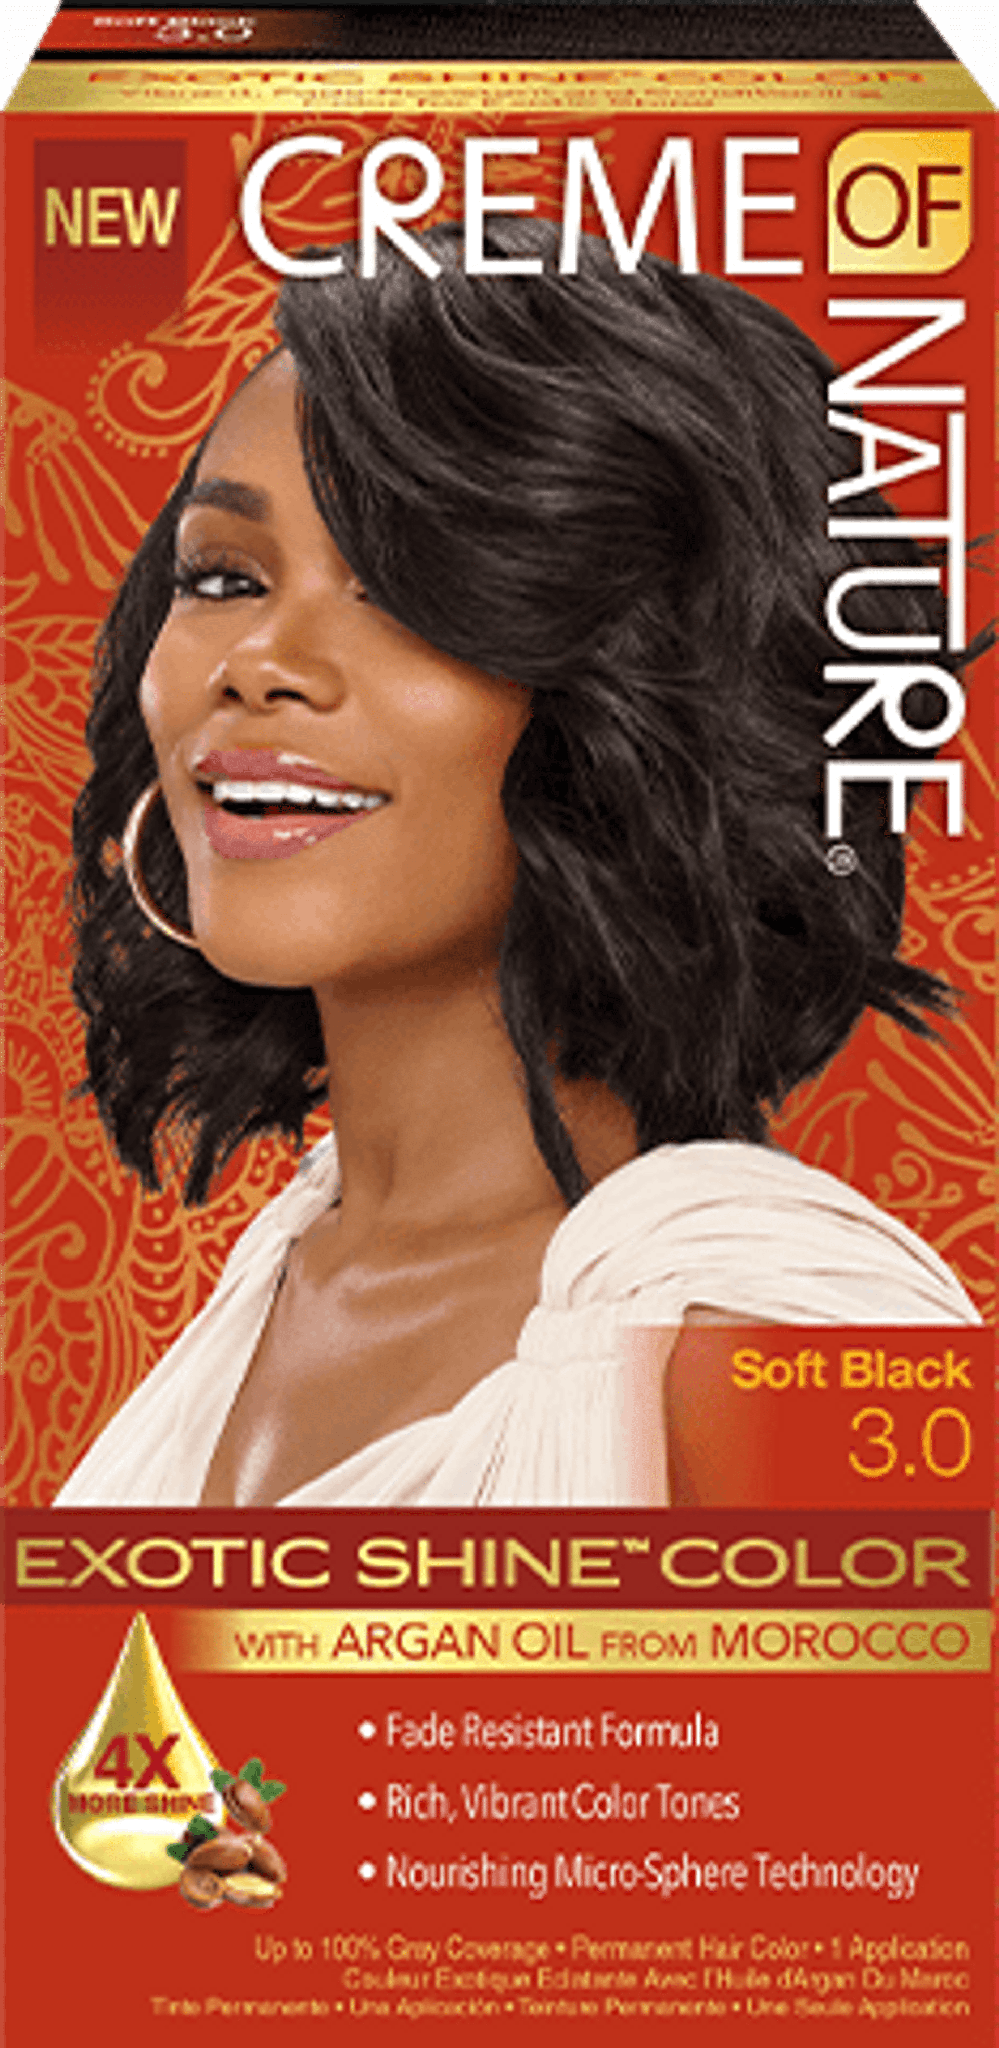 Creme of Nature Permanent Hair Color - Soft Black 3.0